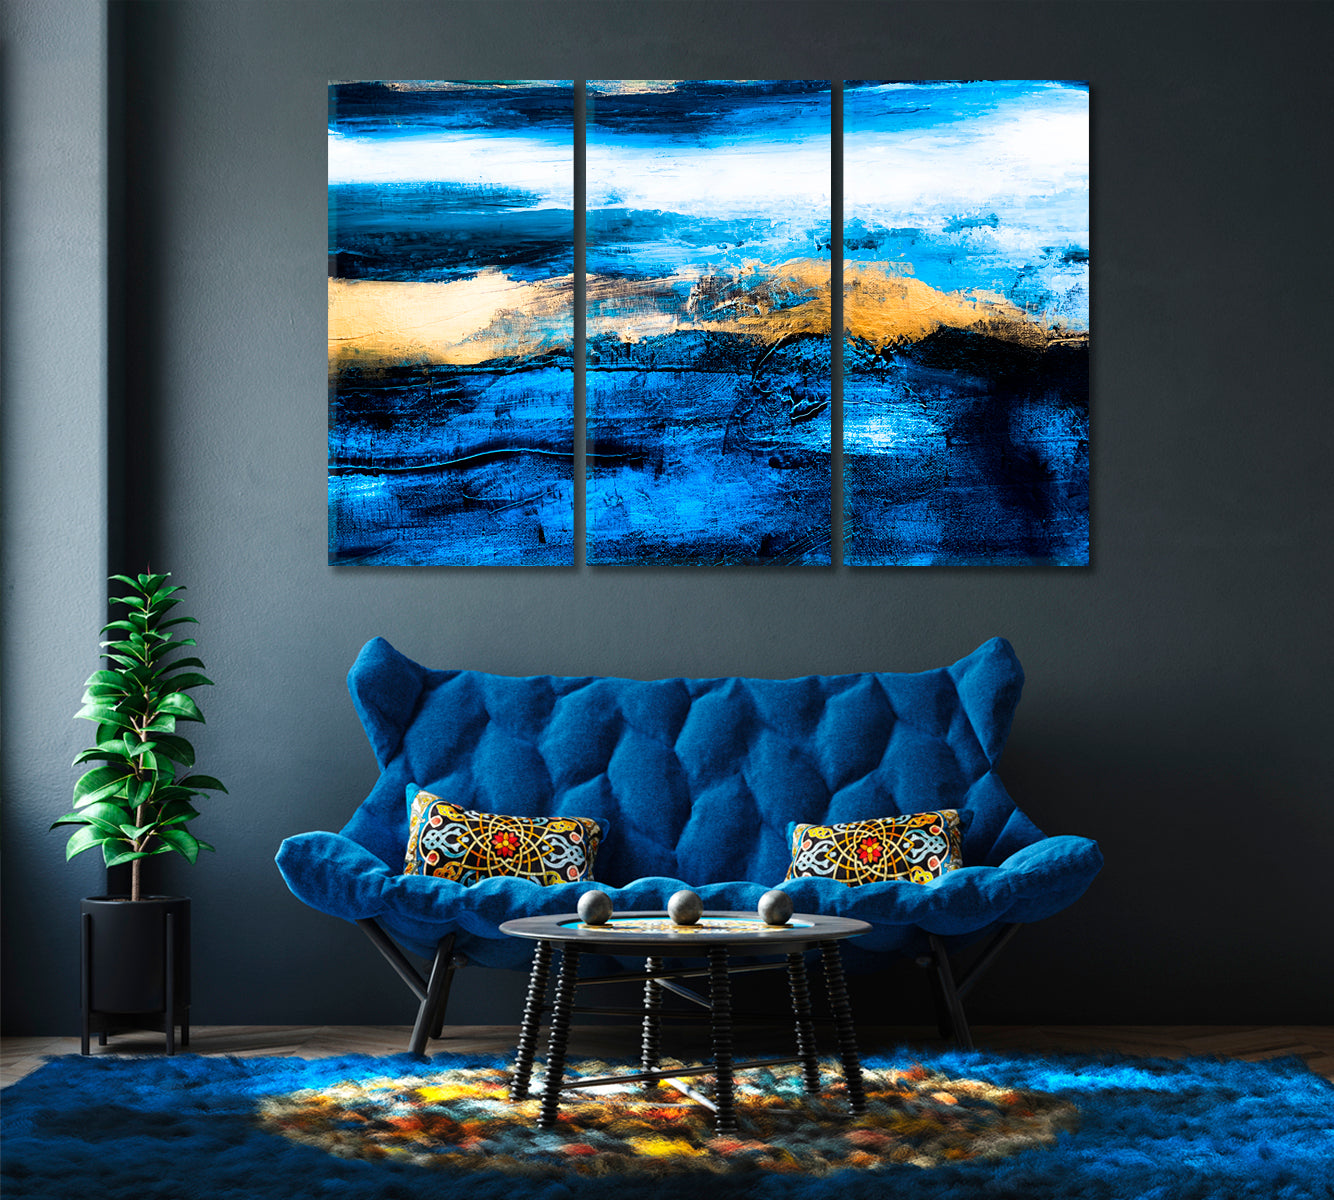 Abstract Sea Landscape Canvas Print-Canvas Print-CetArt-1 Panel-24x16 inches-CetArt